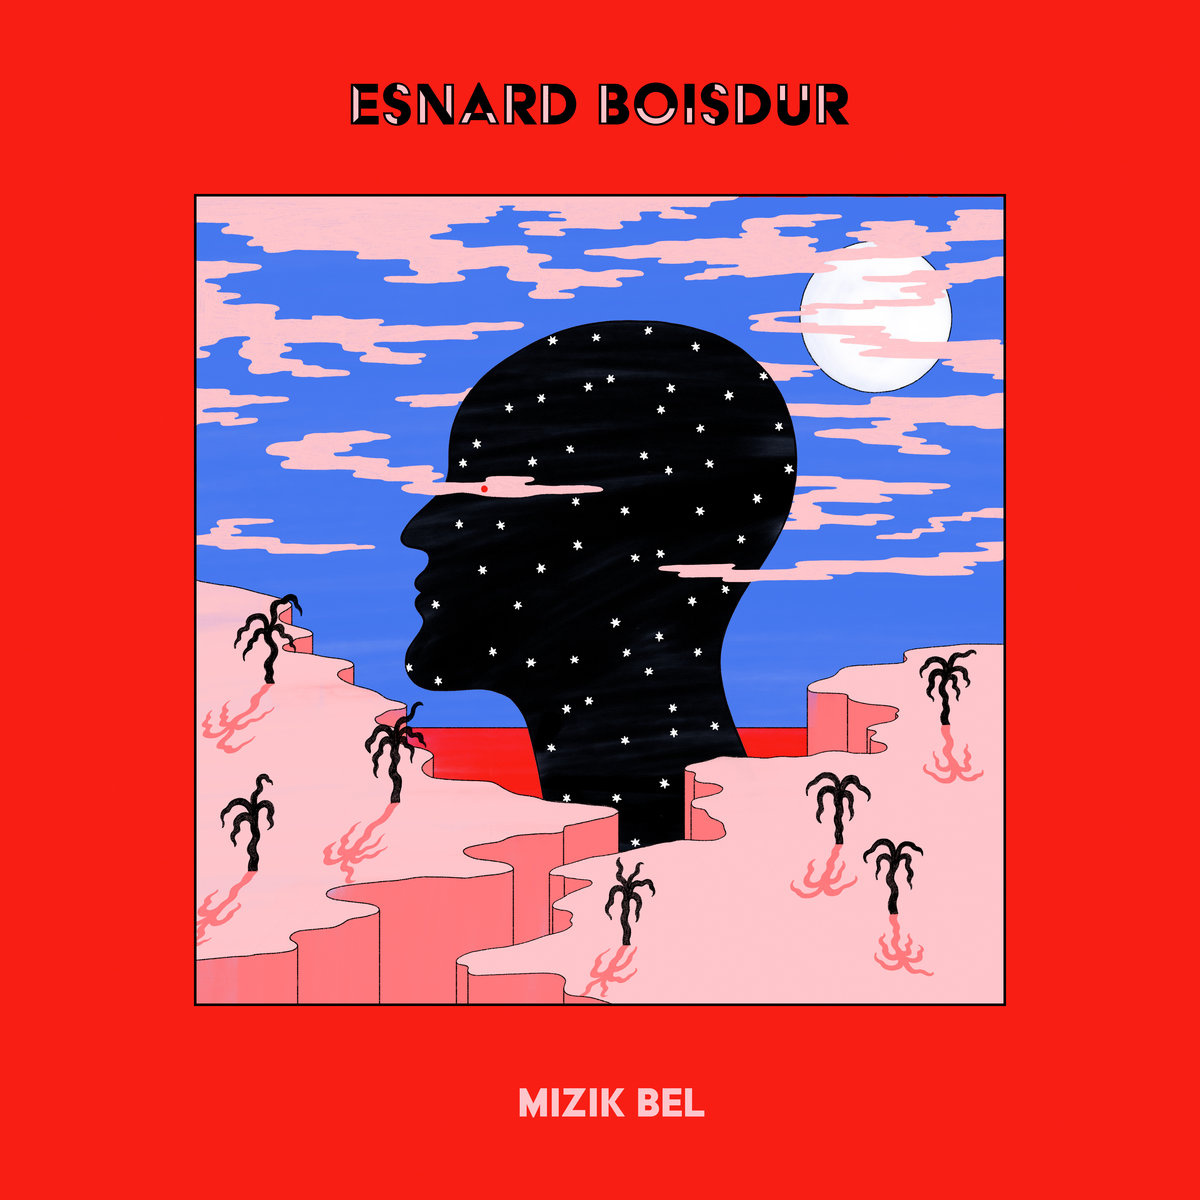 Esnard Boisdur - Mizik Bel vinyl cover